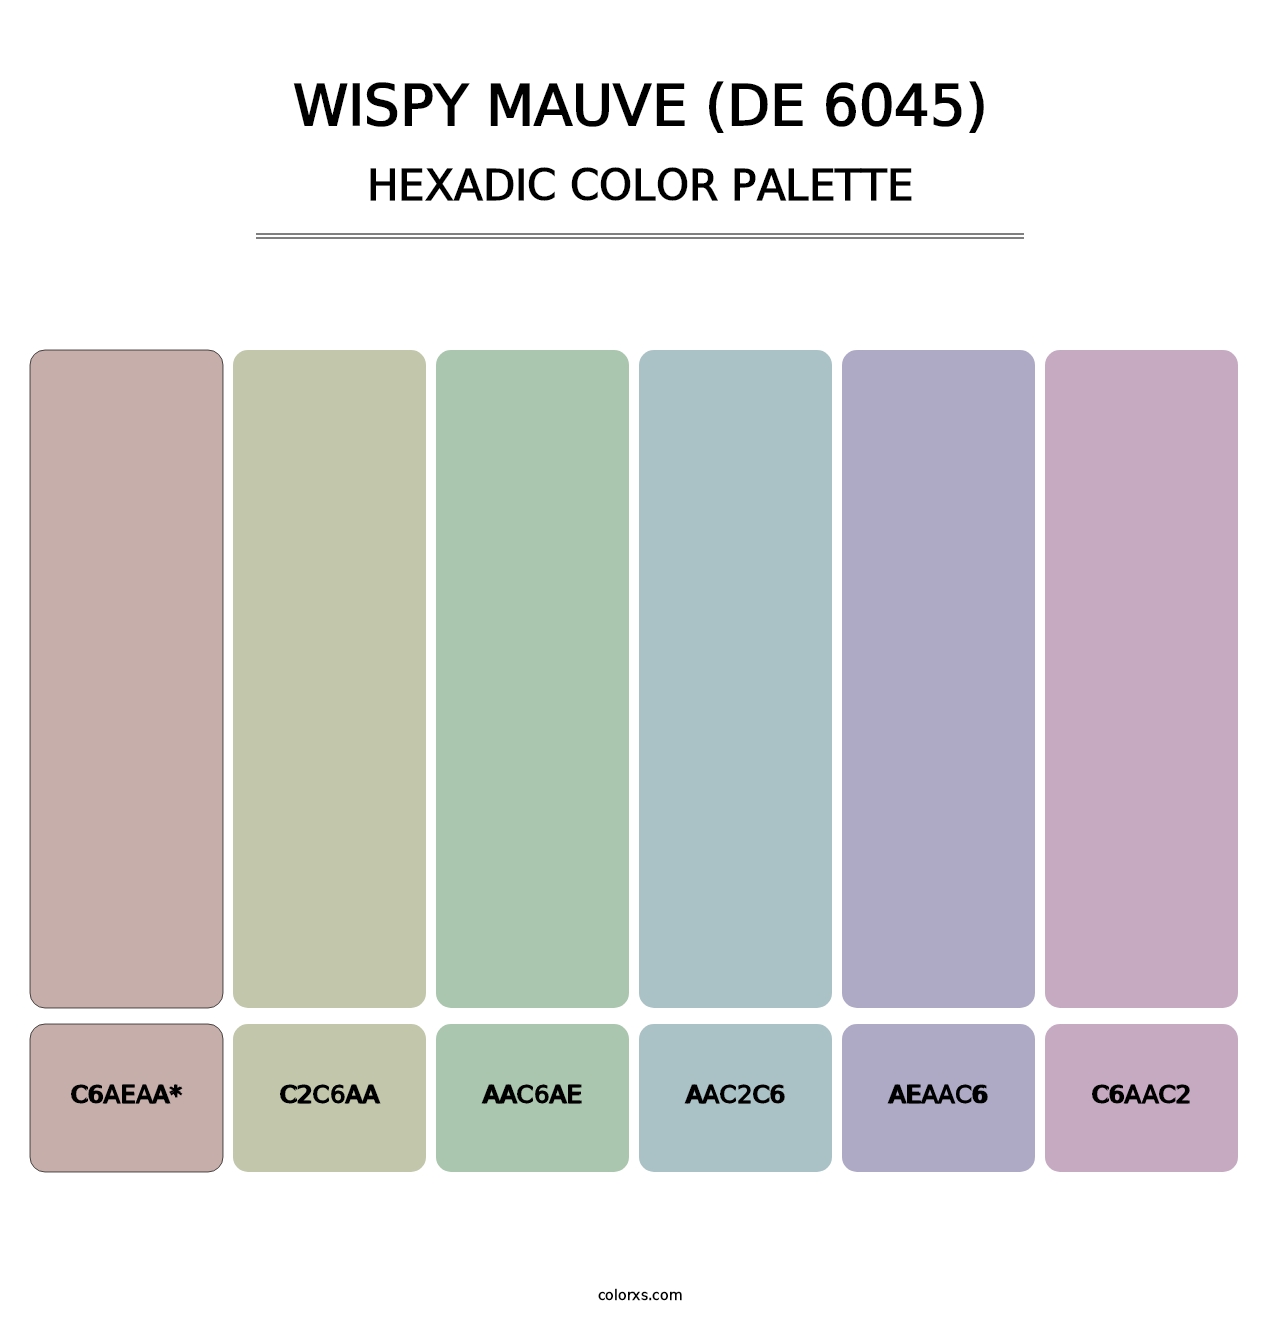 Wispy Mauve (DE 6045) - Hexadic Color Palette